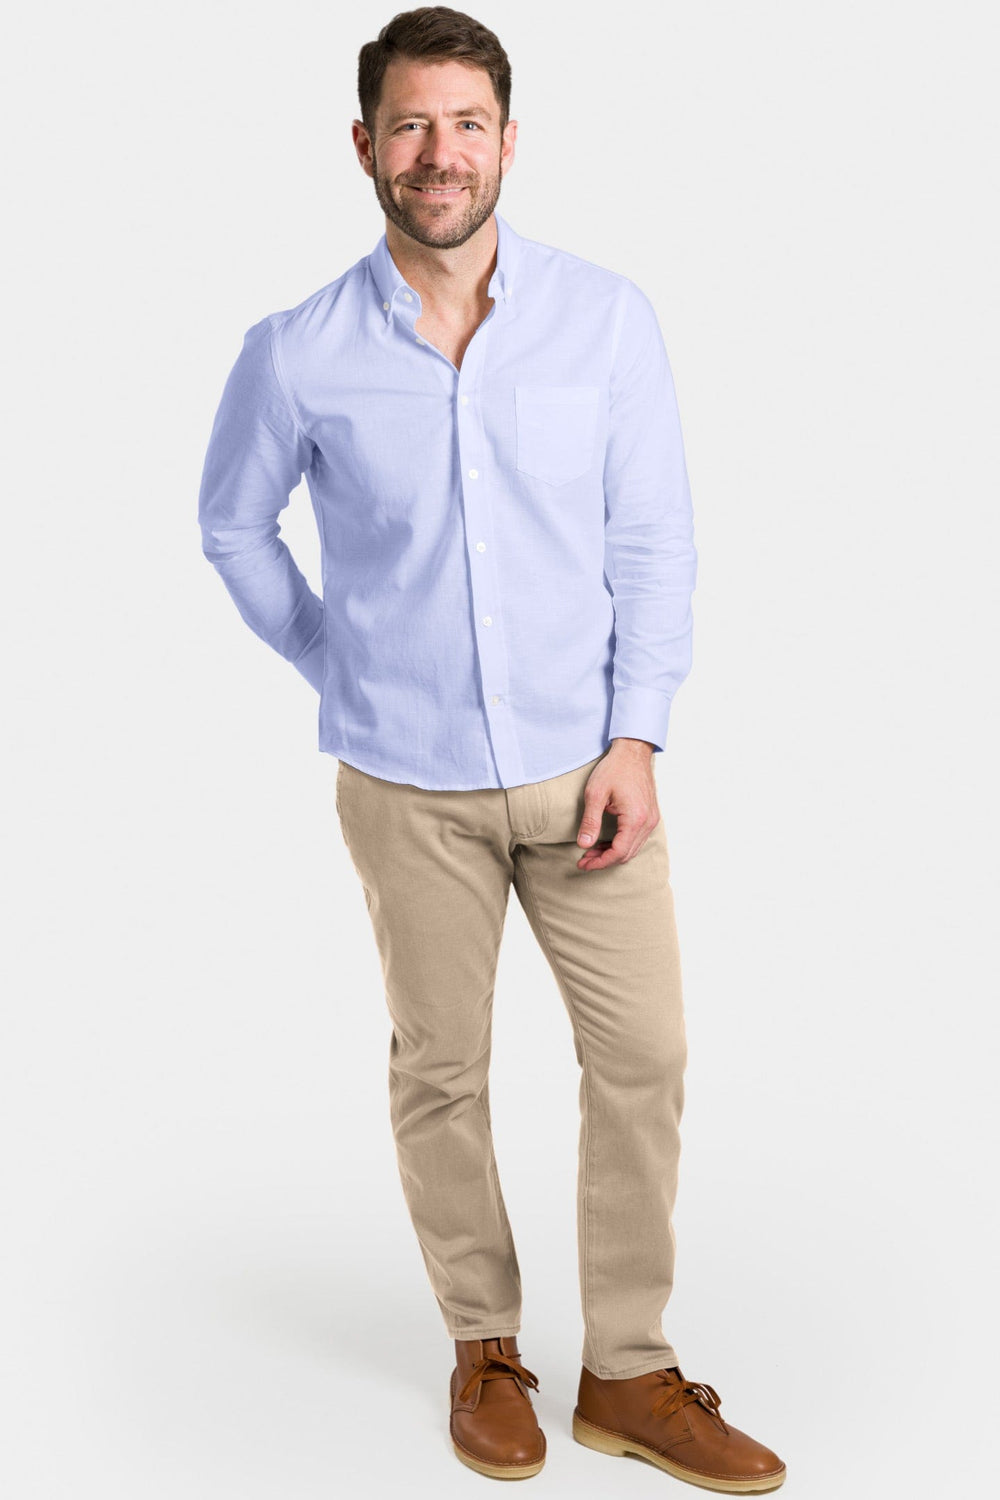 Buy Blue Linen Button-Down Shirt for Short Men | Ash & Erie   Everyday Shirts